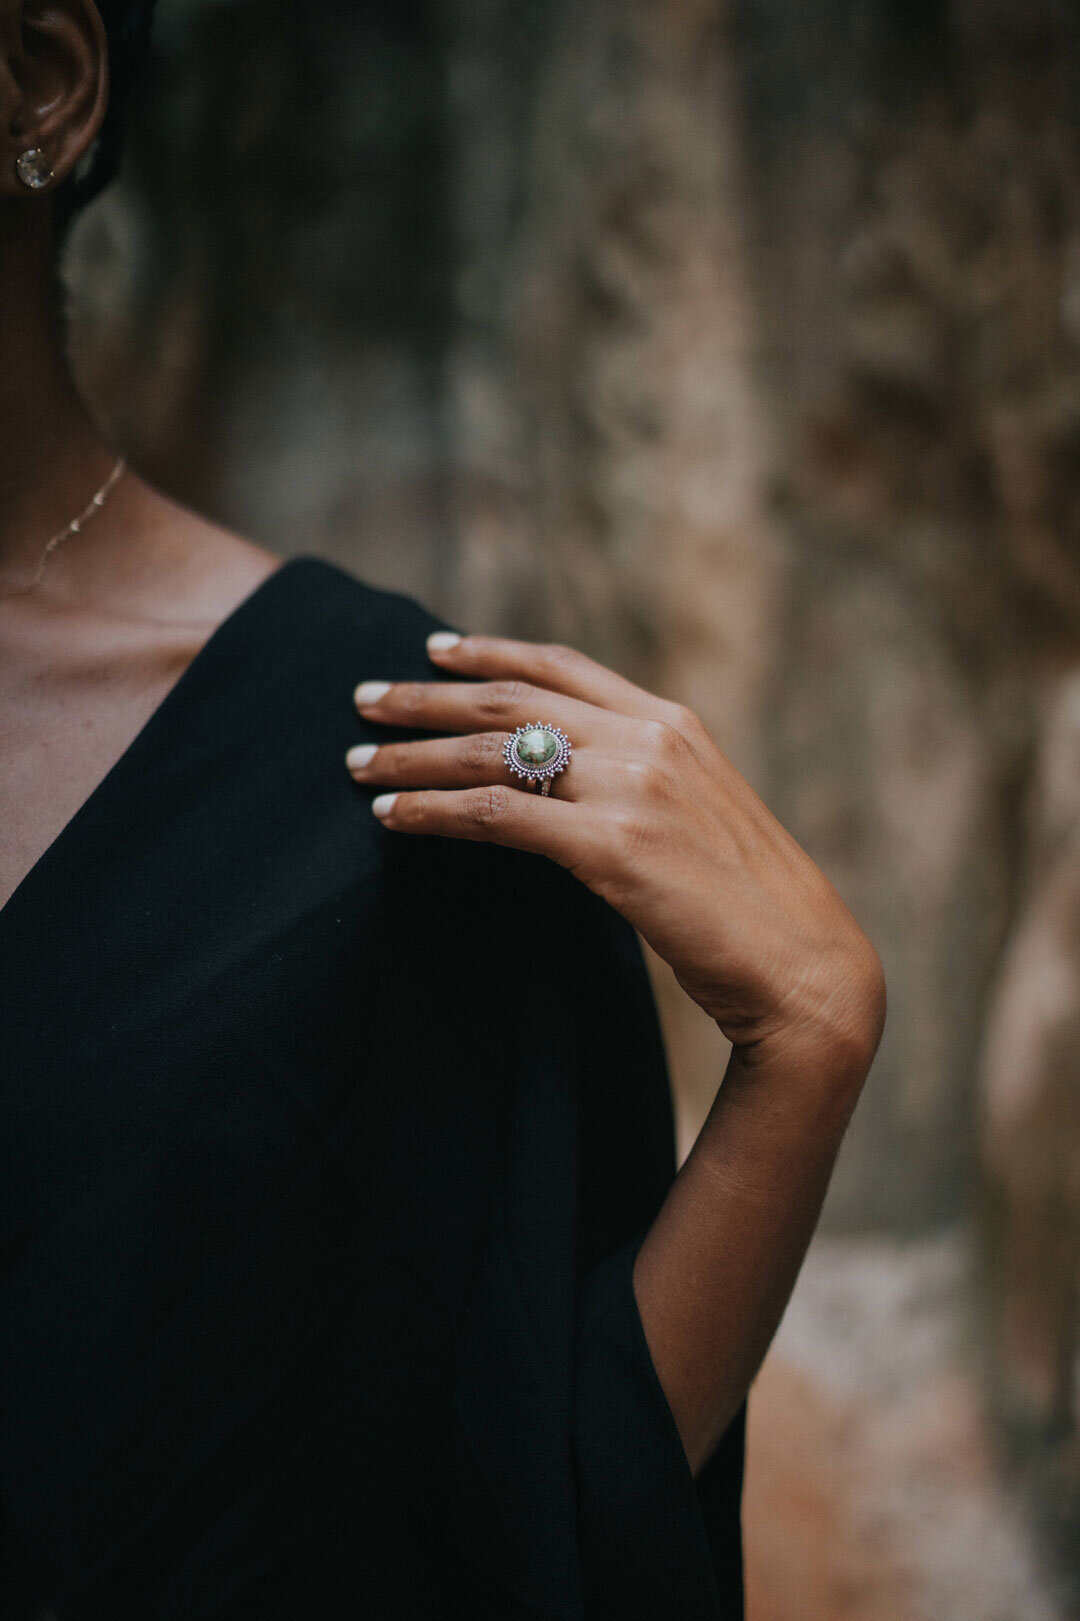 Woman wearing diamond engagement ring and black dress